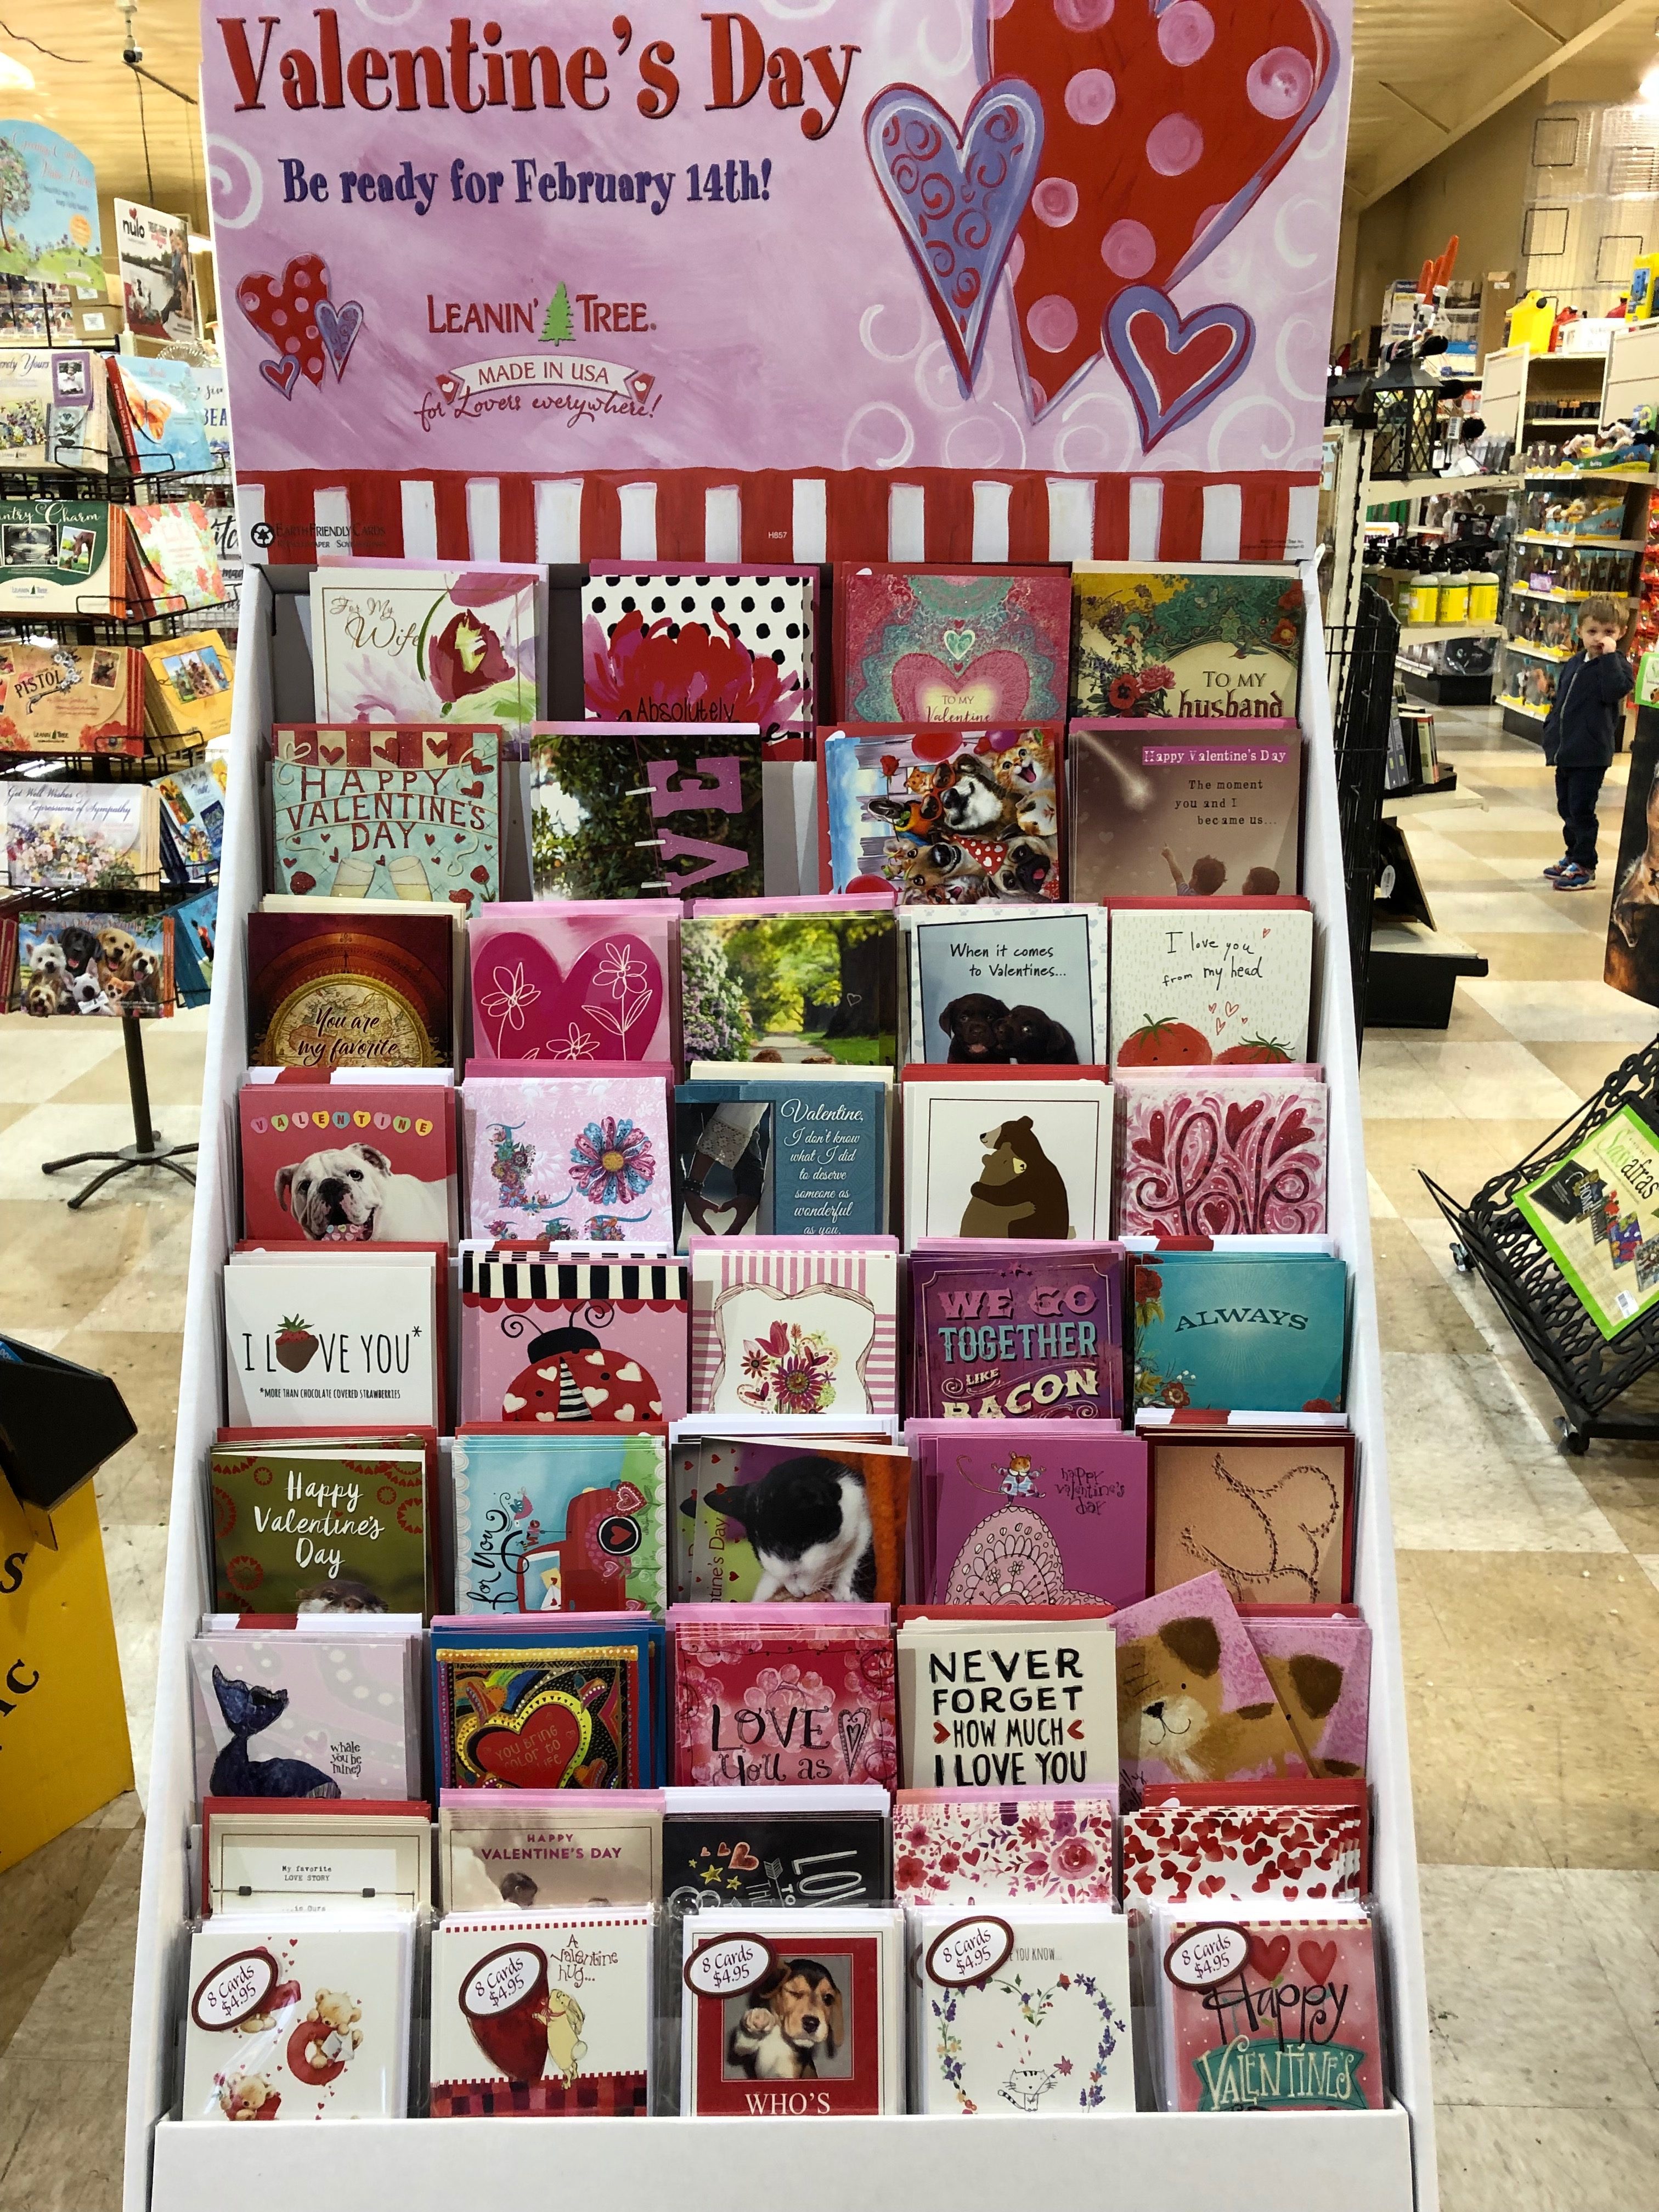 Valentine's Day Gifts: Valentine's Day cards